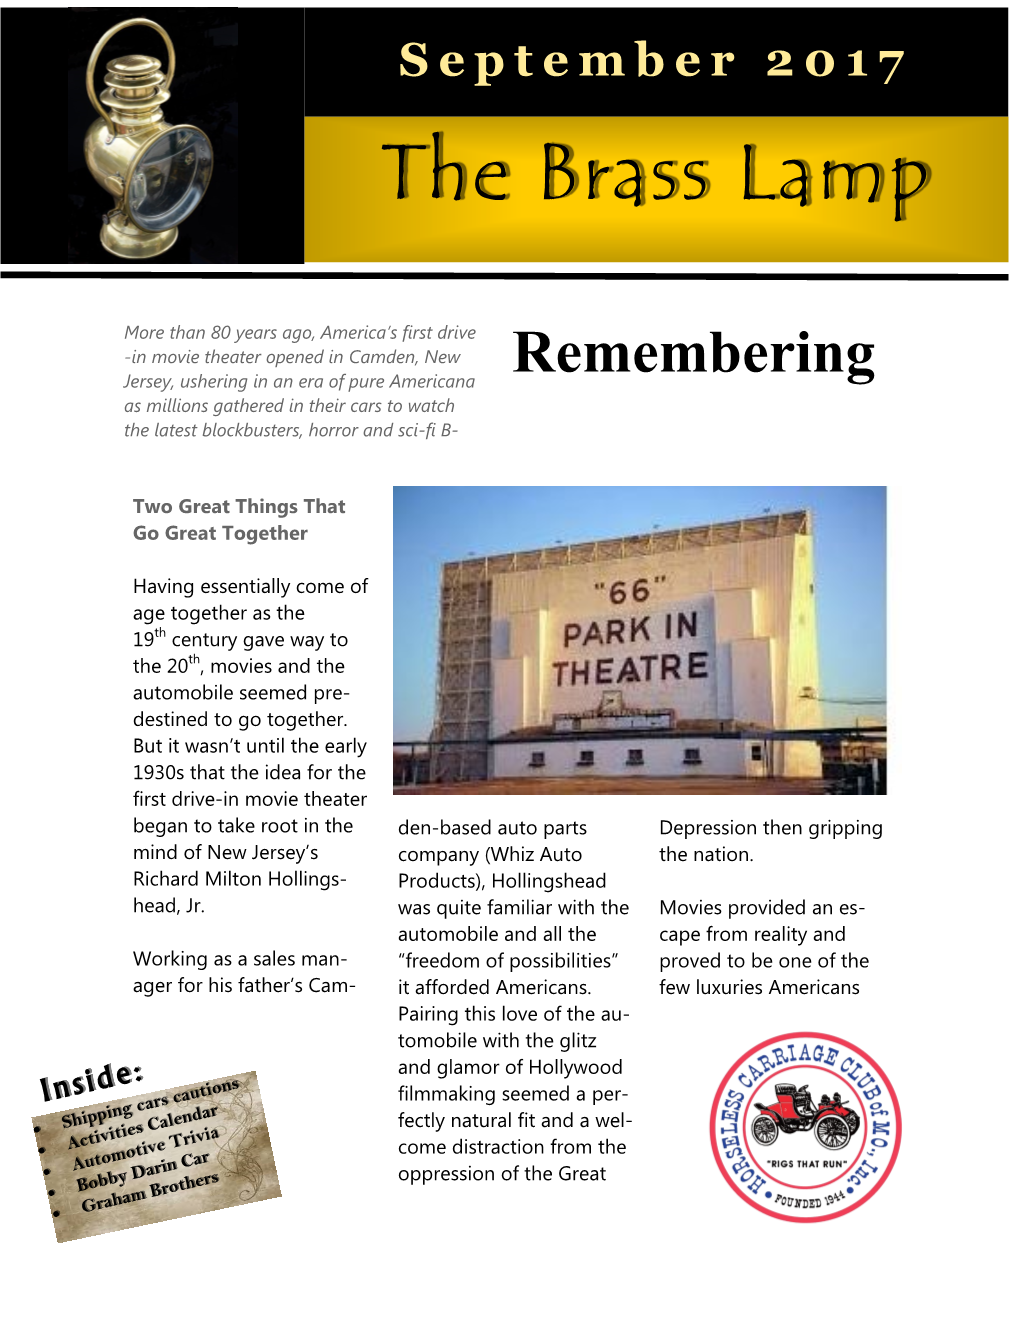 The Brass Lamp